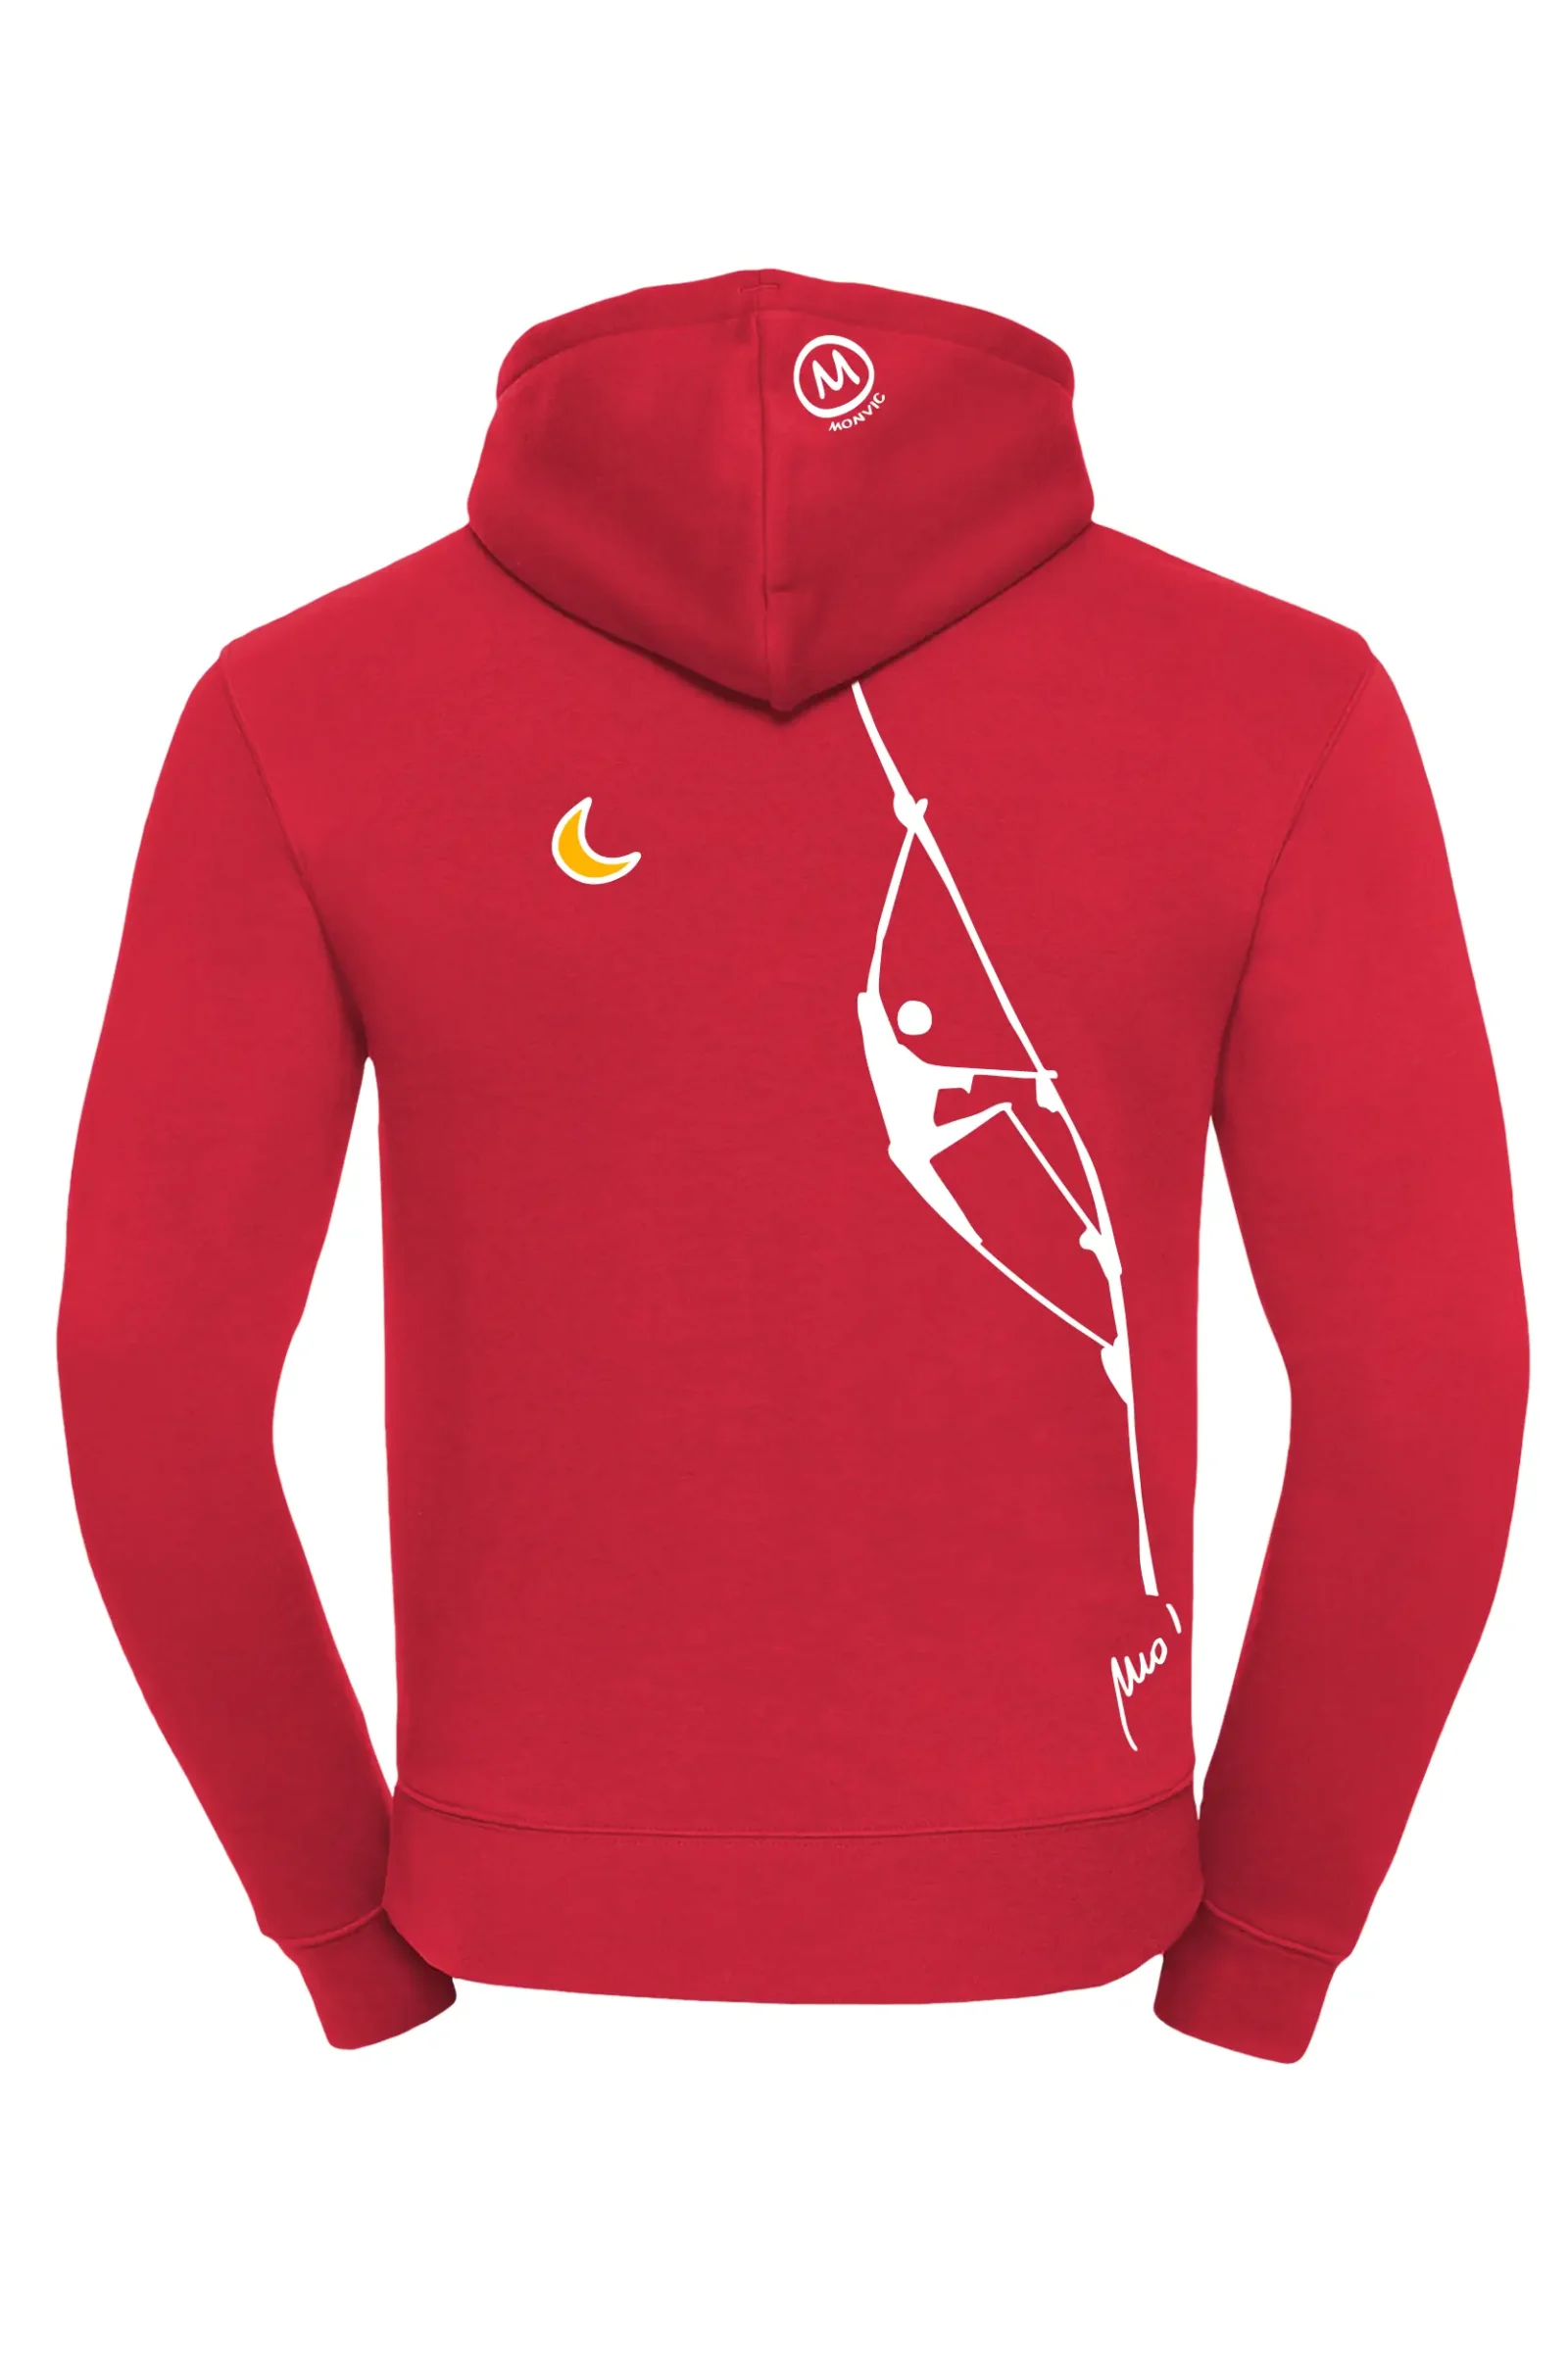 Men's / unisex hoodie - "Teba" climbing graphics - red cotton - NAVAJO MONVIC